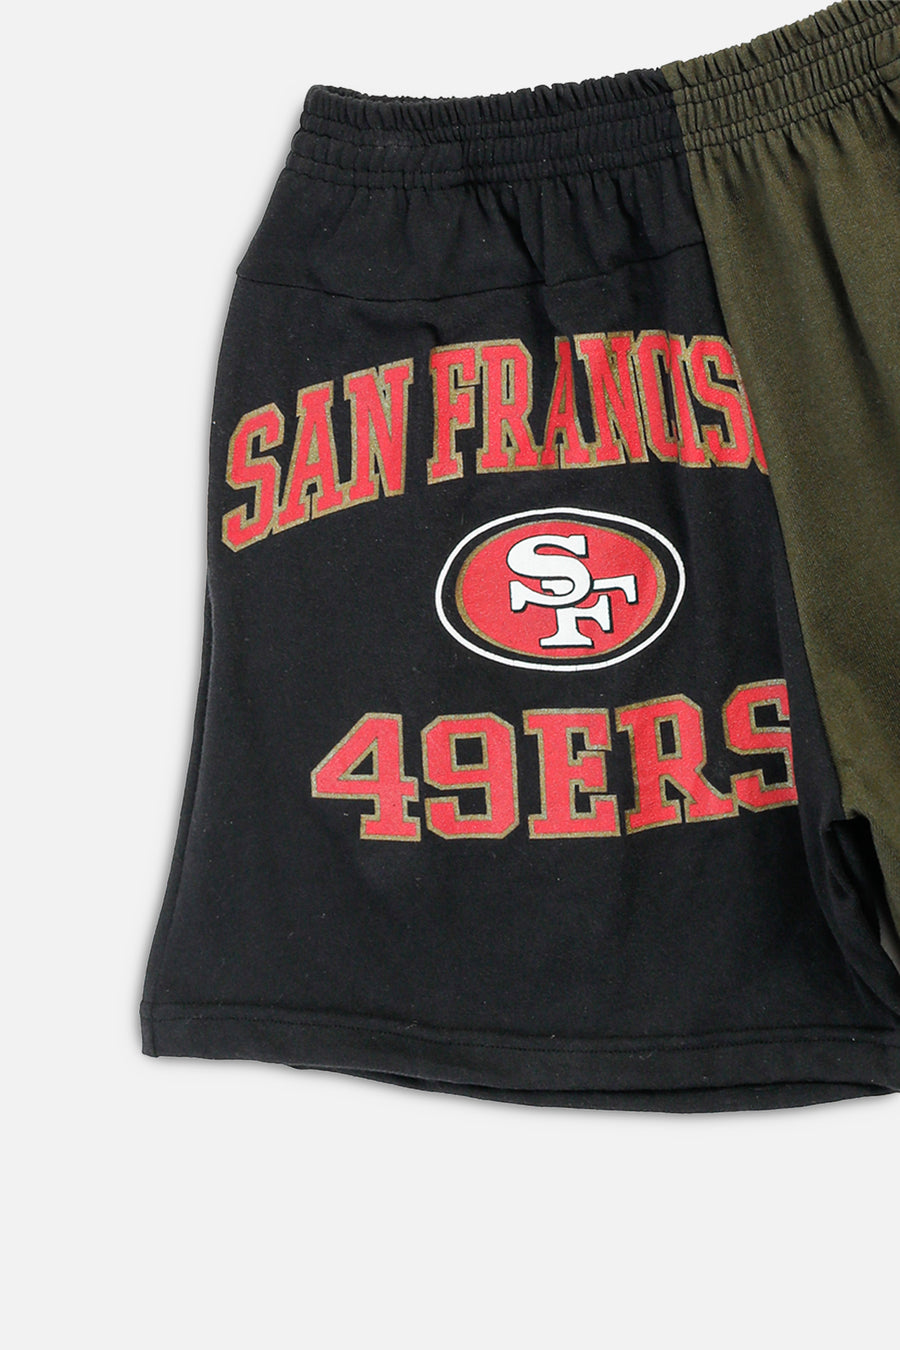 Unisex Rework San Francisco 49ers NFL Tee Shorts - S